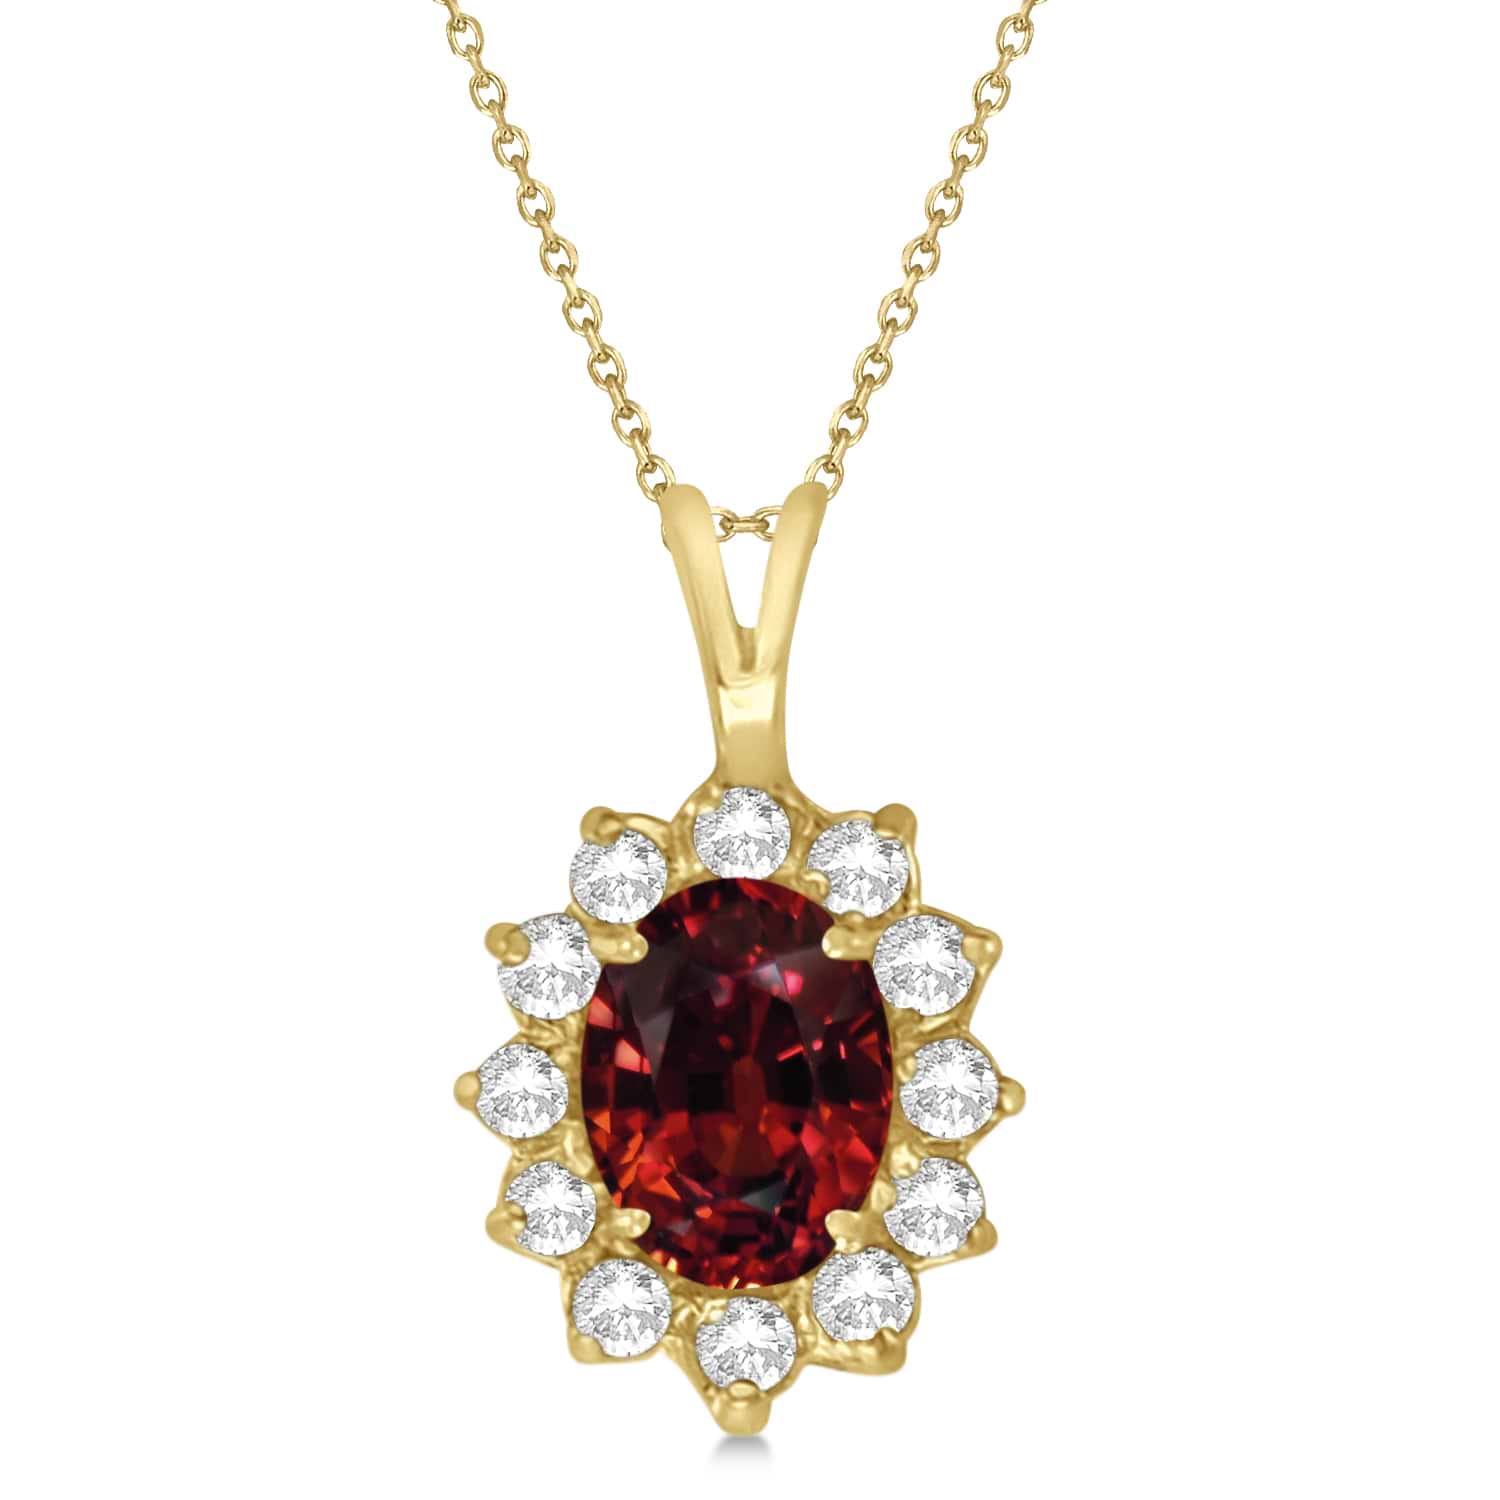 Garnet & Diamond Accented Pendant Necklace 14k Yellow Gold (1.70ctw)